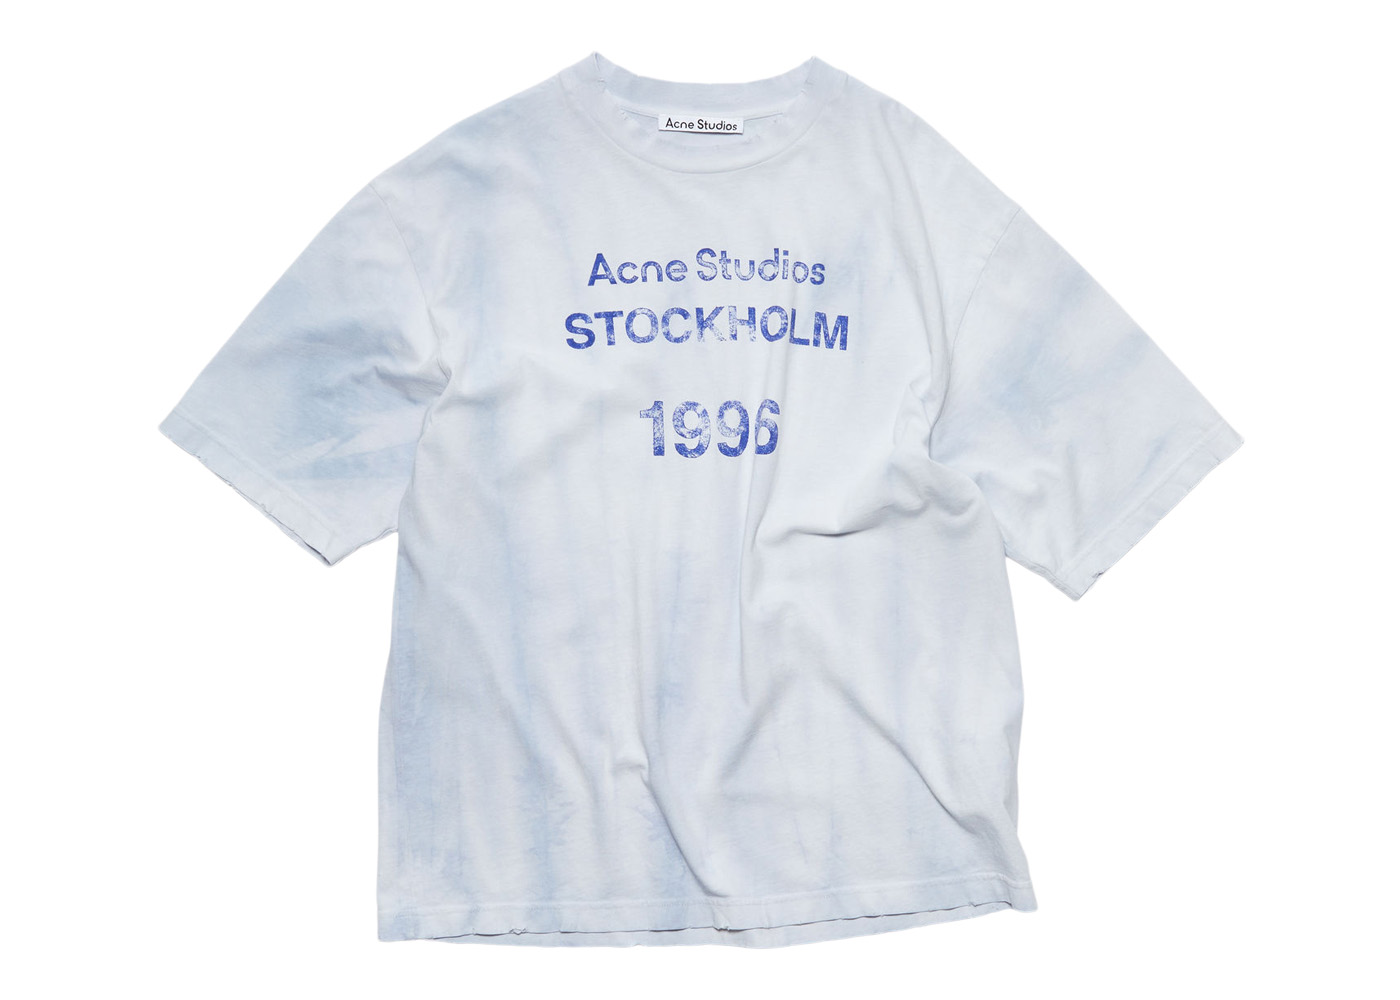 Acne Studios Stockholm 1996 Stamp T-shirt Pale Blue メンズ - JP